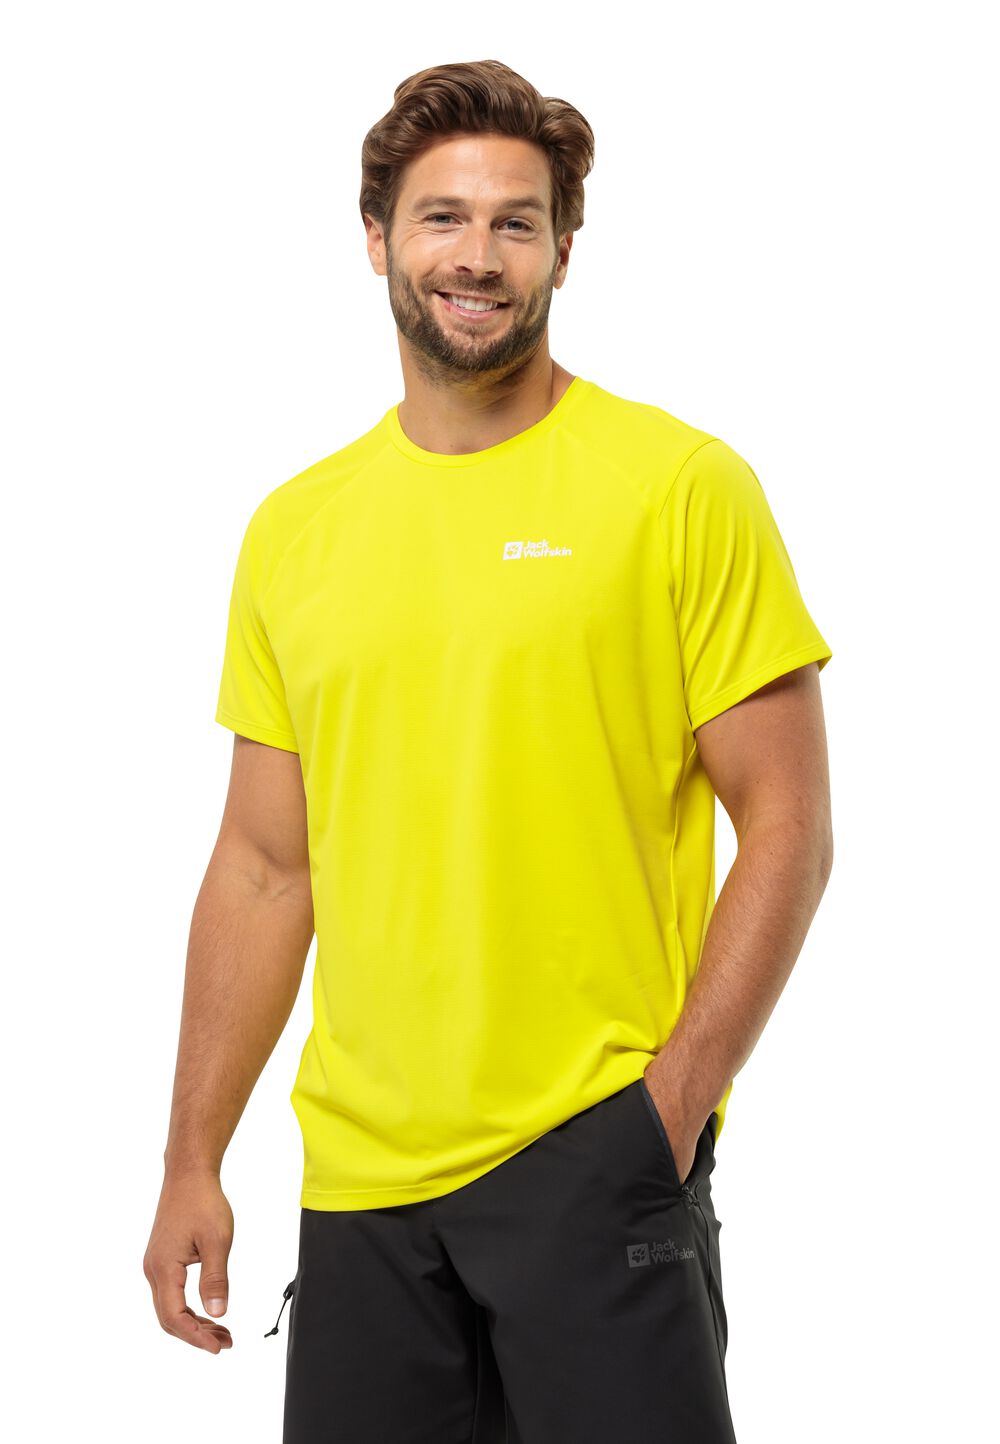 Jack Wolfskin Prelight Trail T-Shirt Men Functioneel shirt Heren XL oranje firefly